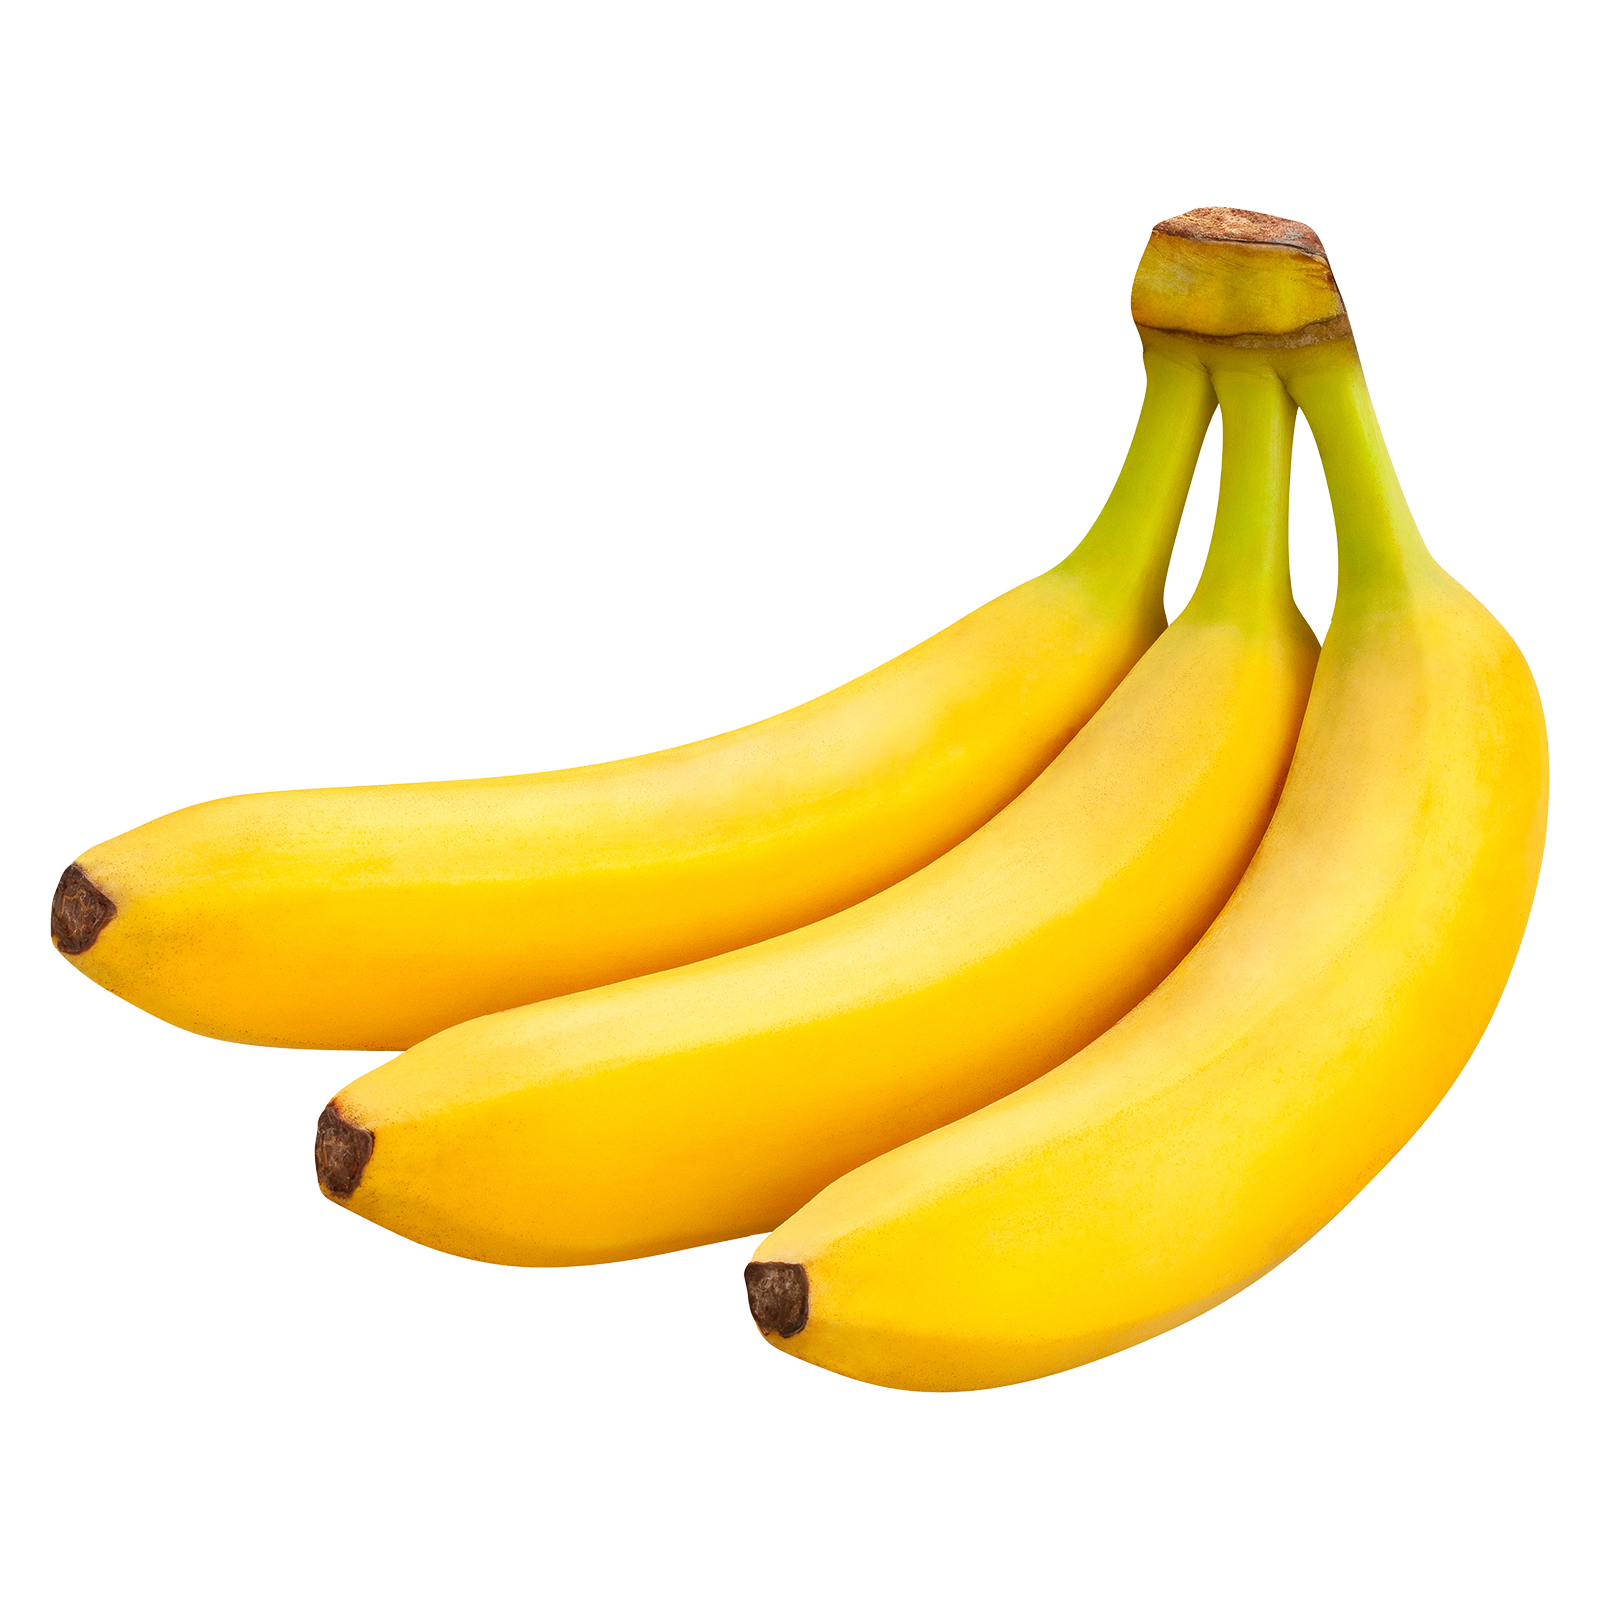 Banana 3ct